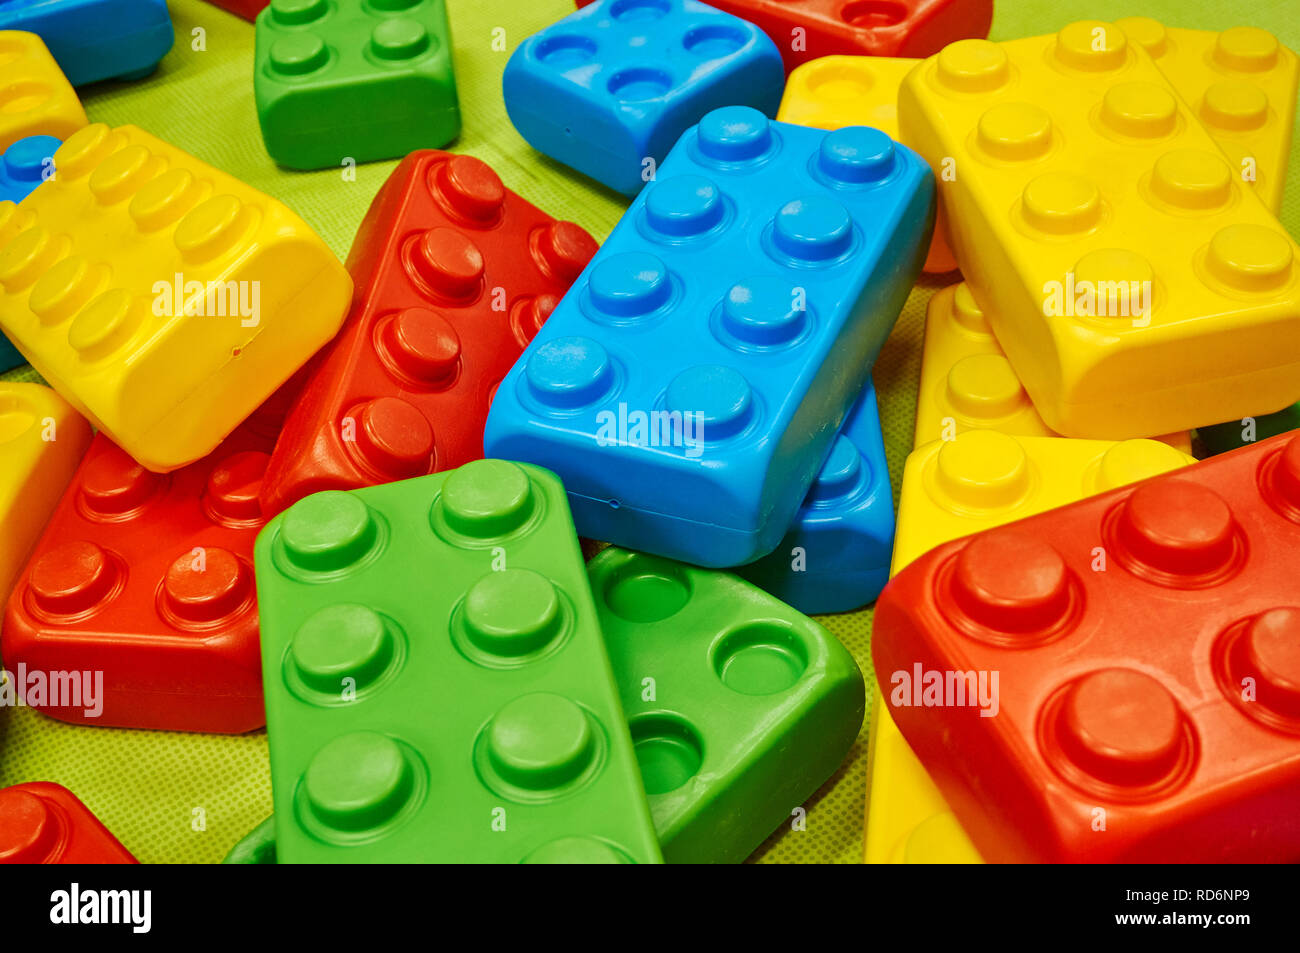 Oversized children's colorful plastic building blocks scattered on the floor. Stock Photo